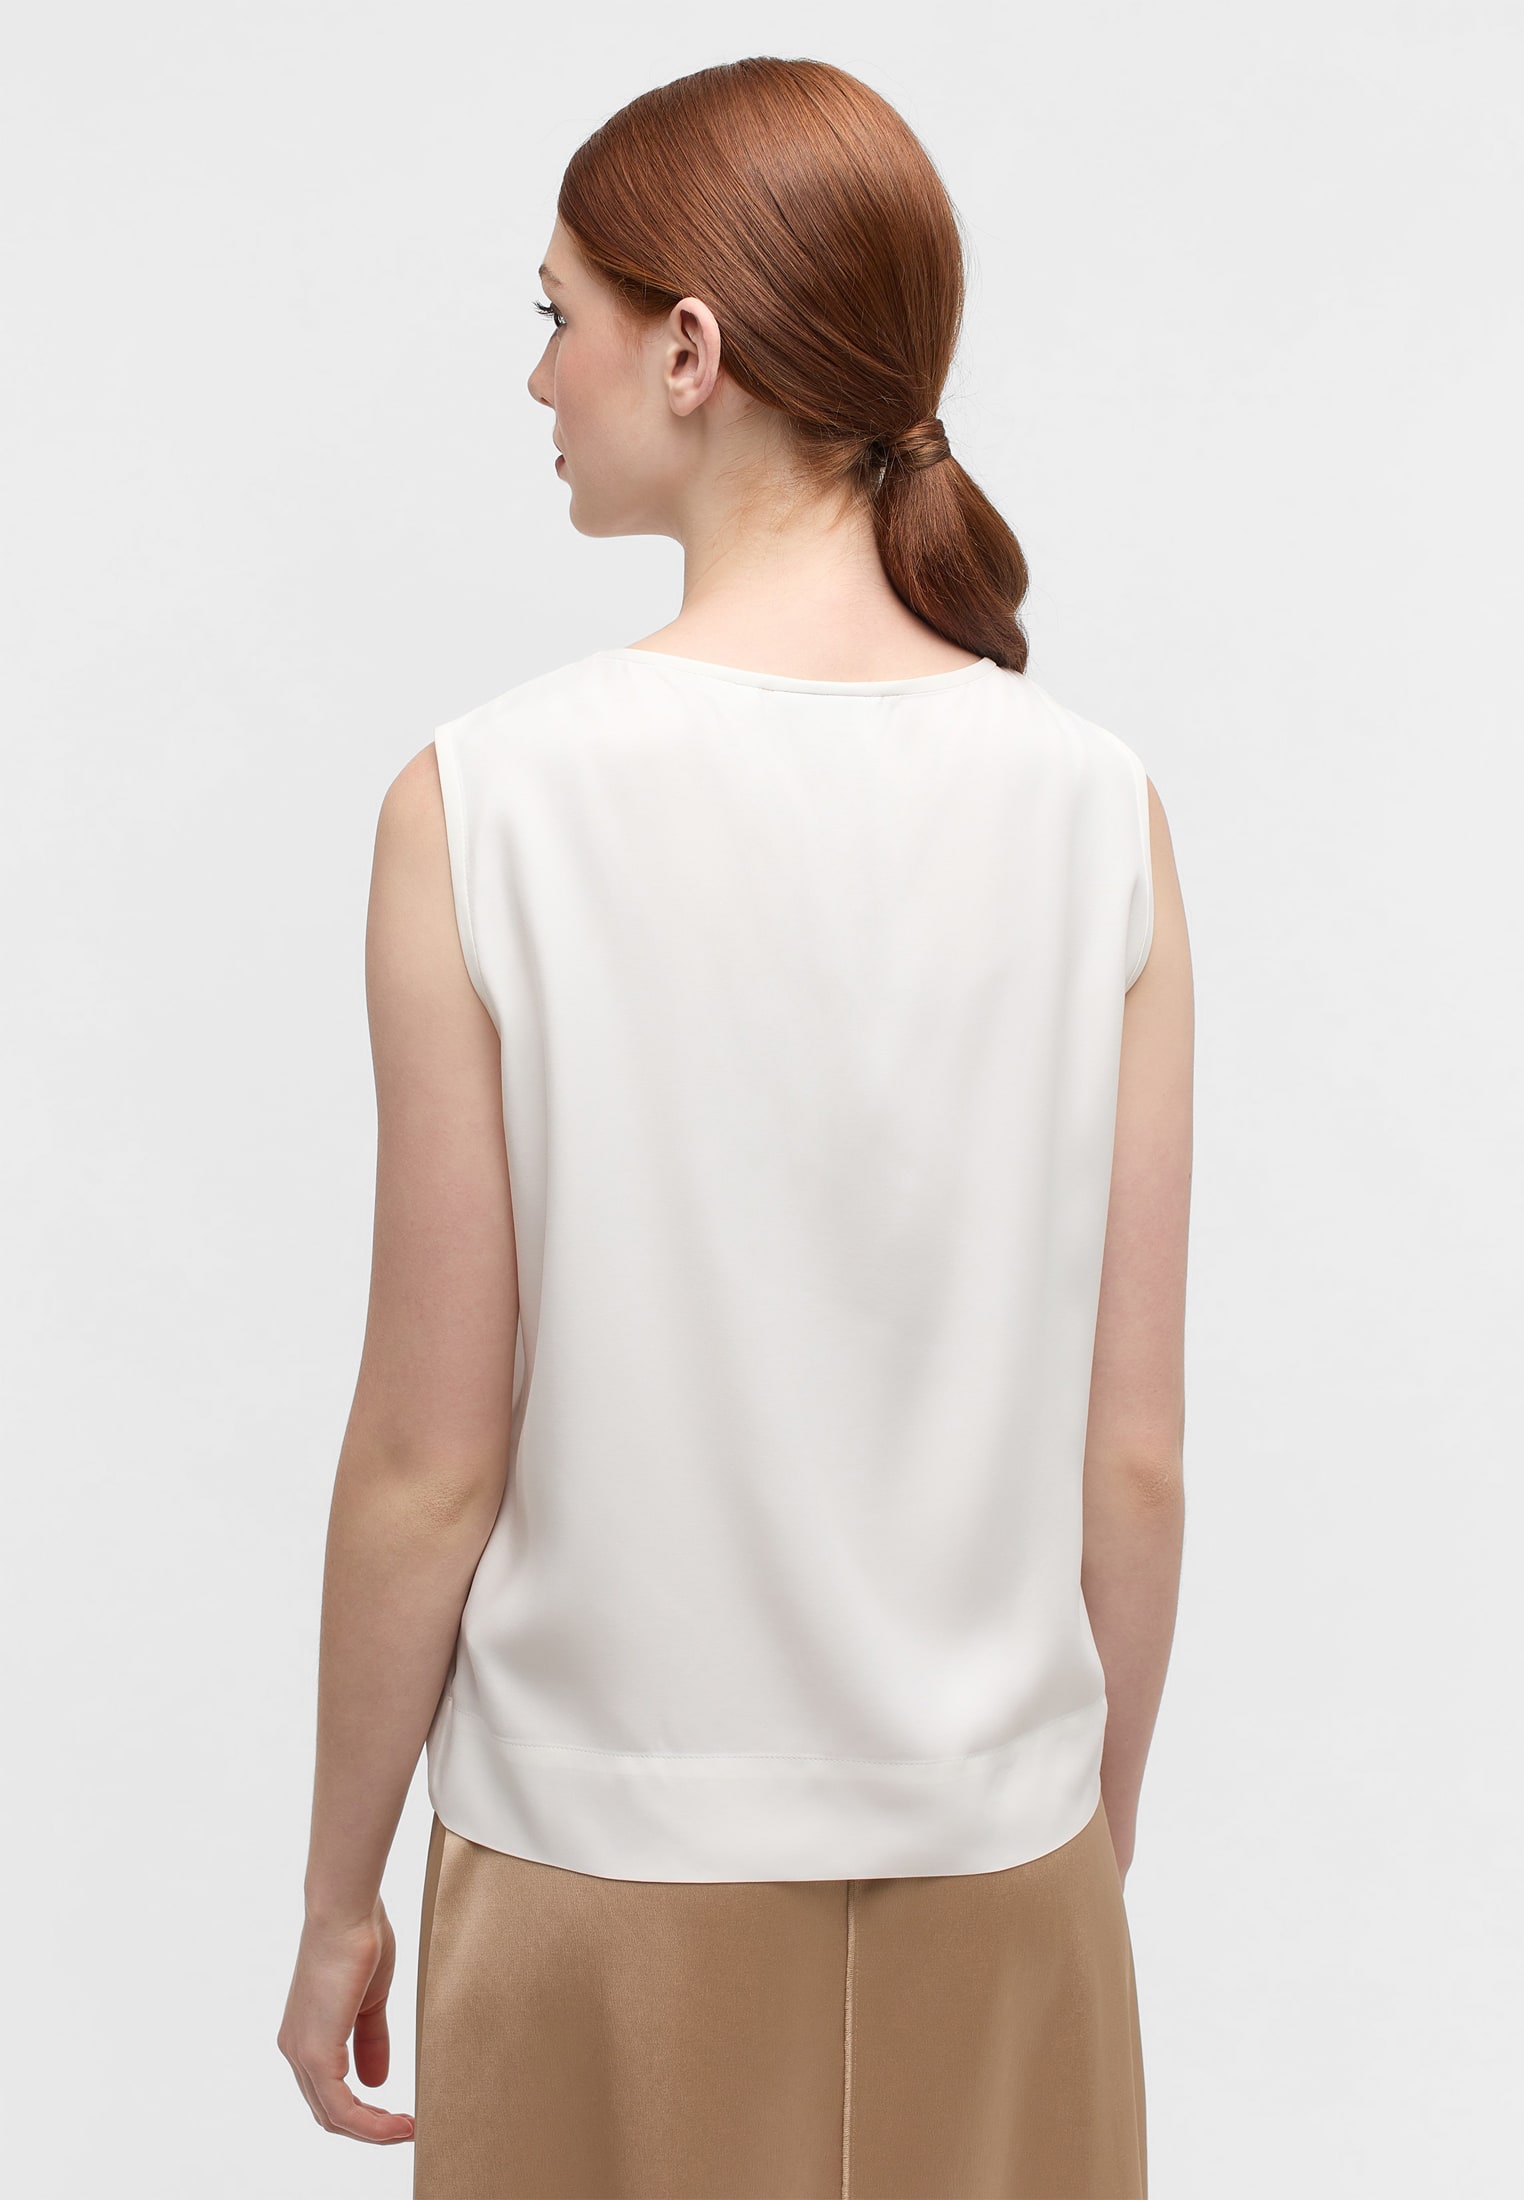 Viscose Shirt Bluse | in off-white | unifarben 54 off-white | | 2BL04345-00-02-54-sl Arm ohne